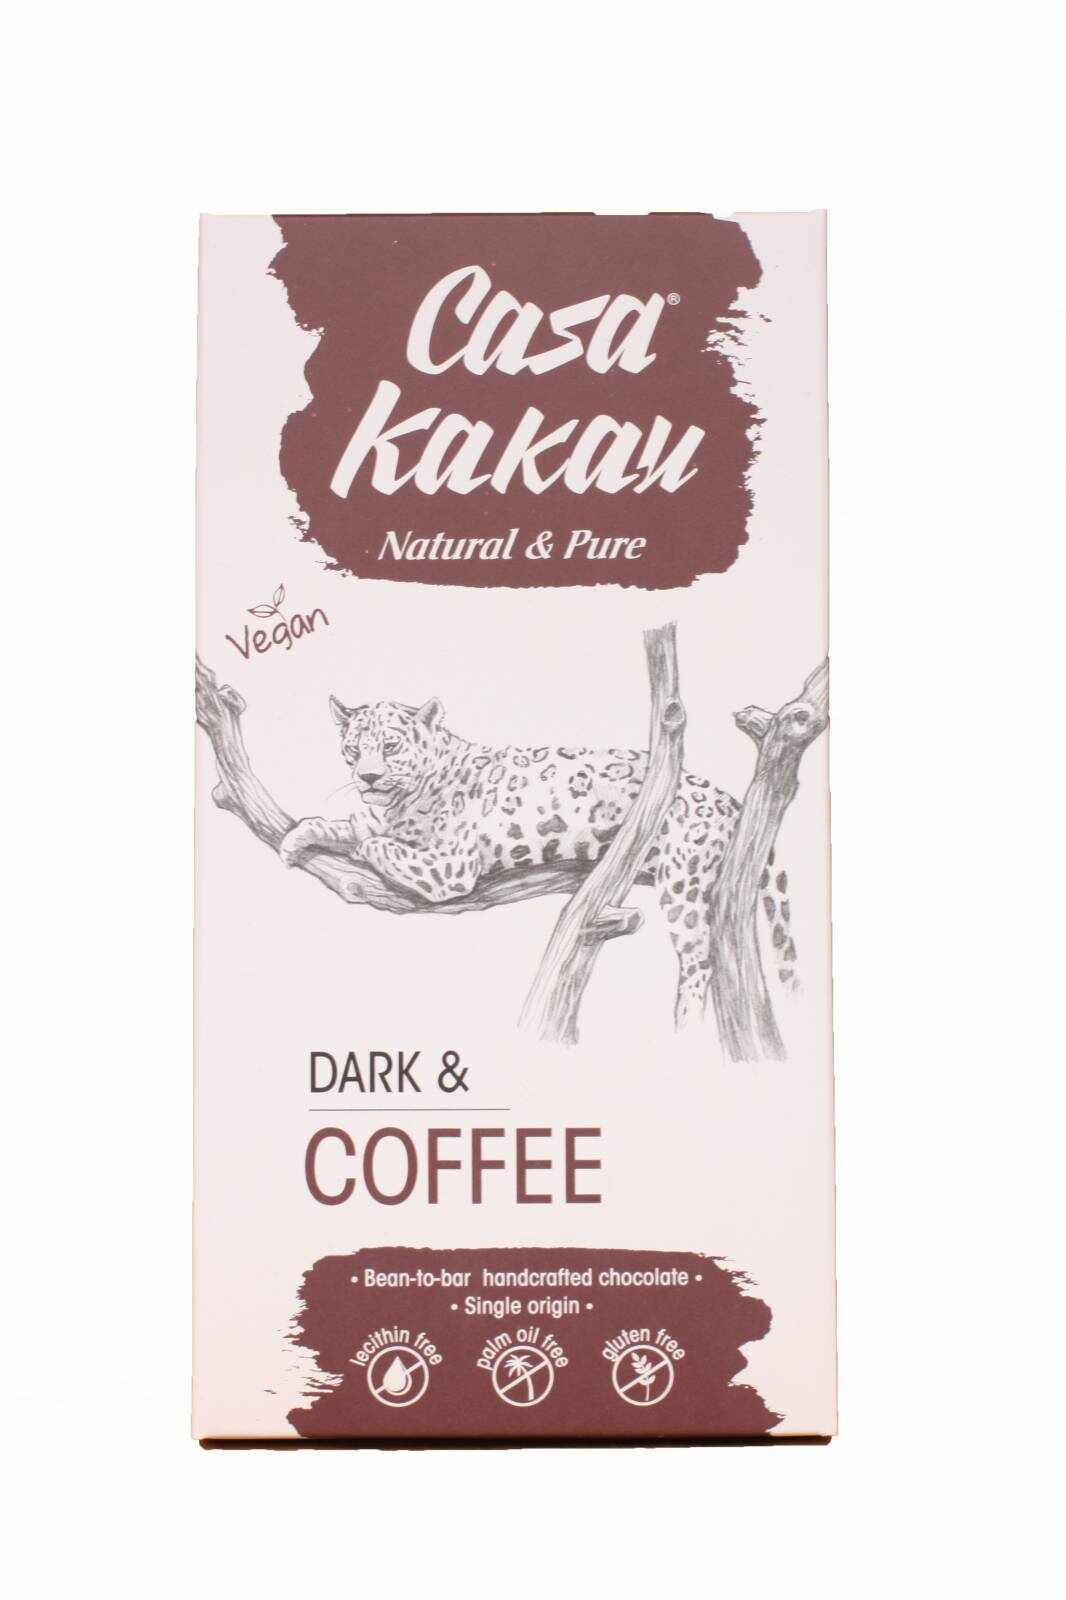 Ciocolata vegana cu boabe de cafea 68%, 80g - Casa Kakau